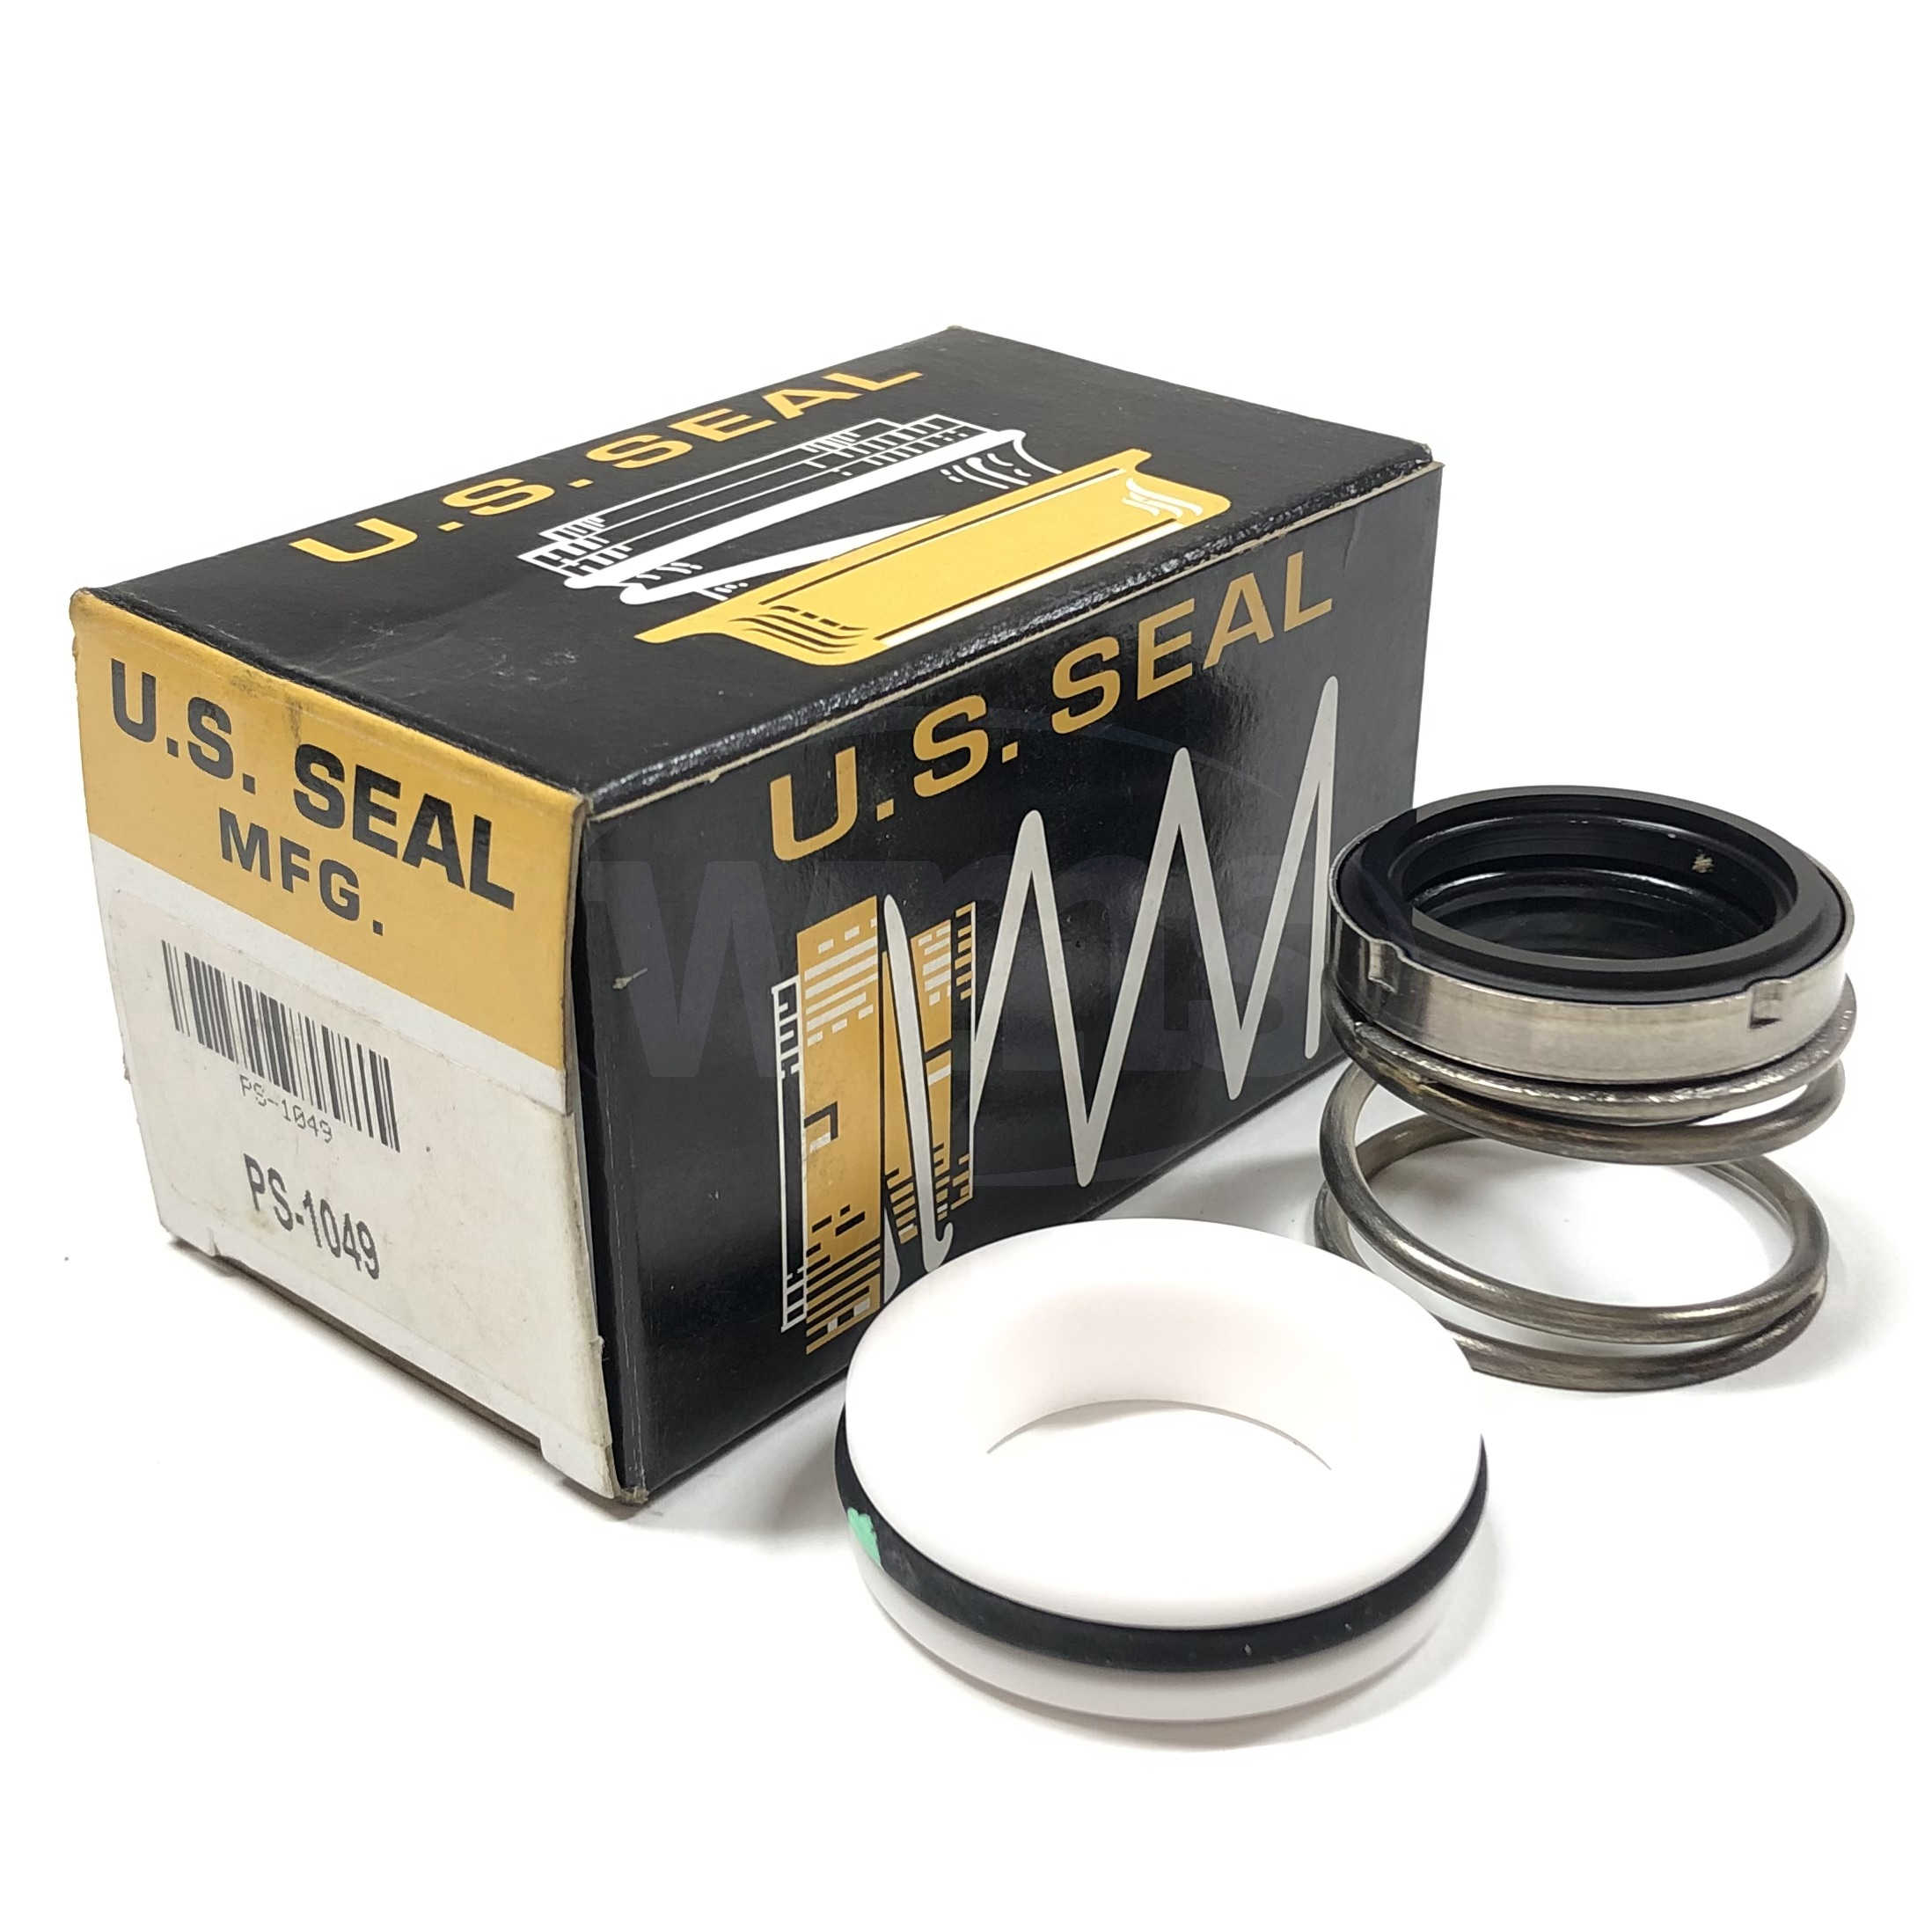 PS-1049 U.S. Seal MFG. Pump Seal 1